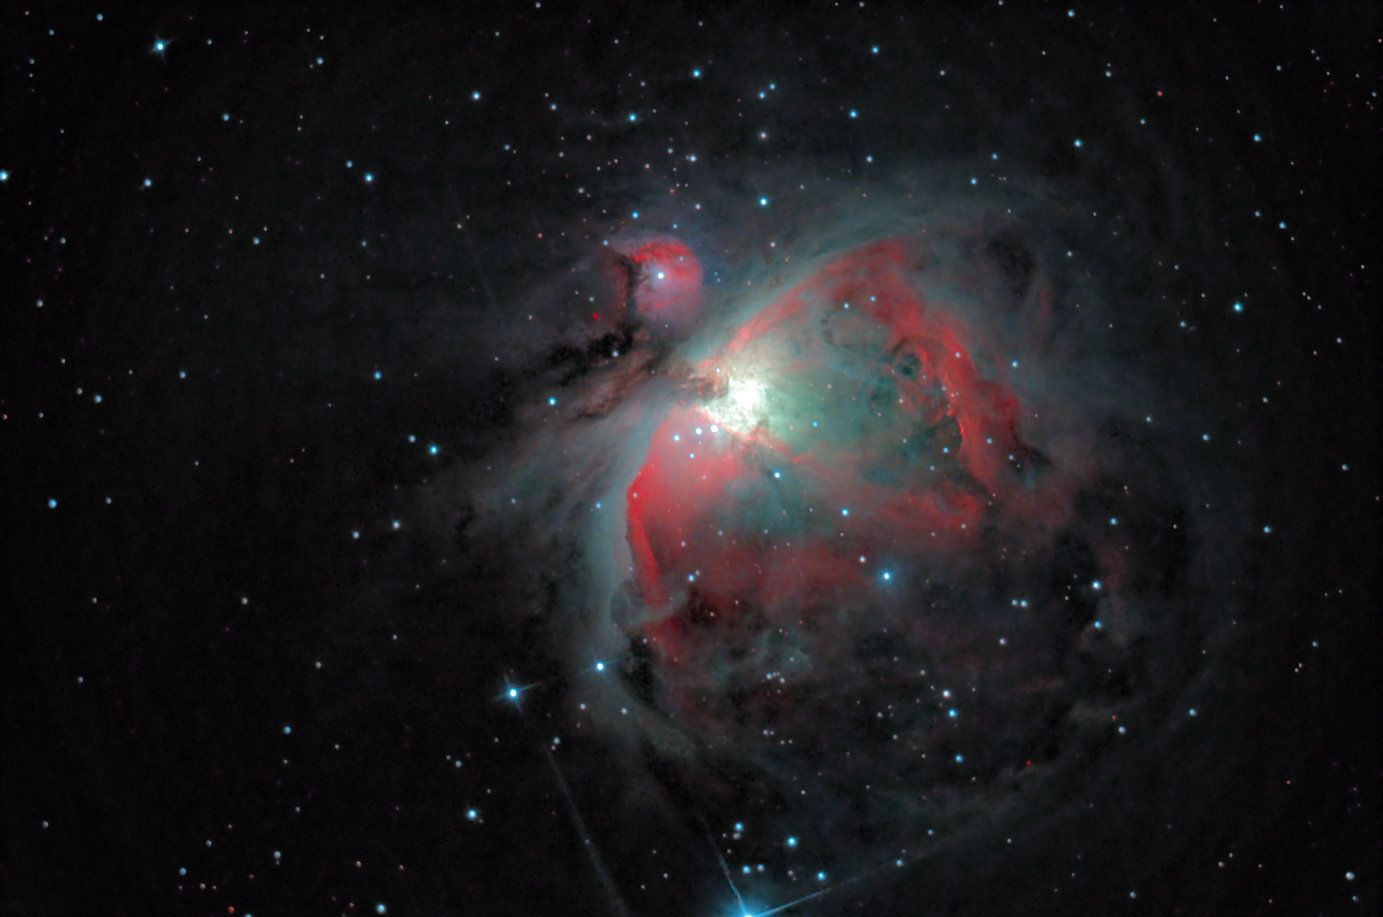 Orion's gaseous nebula.